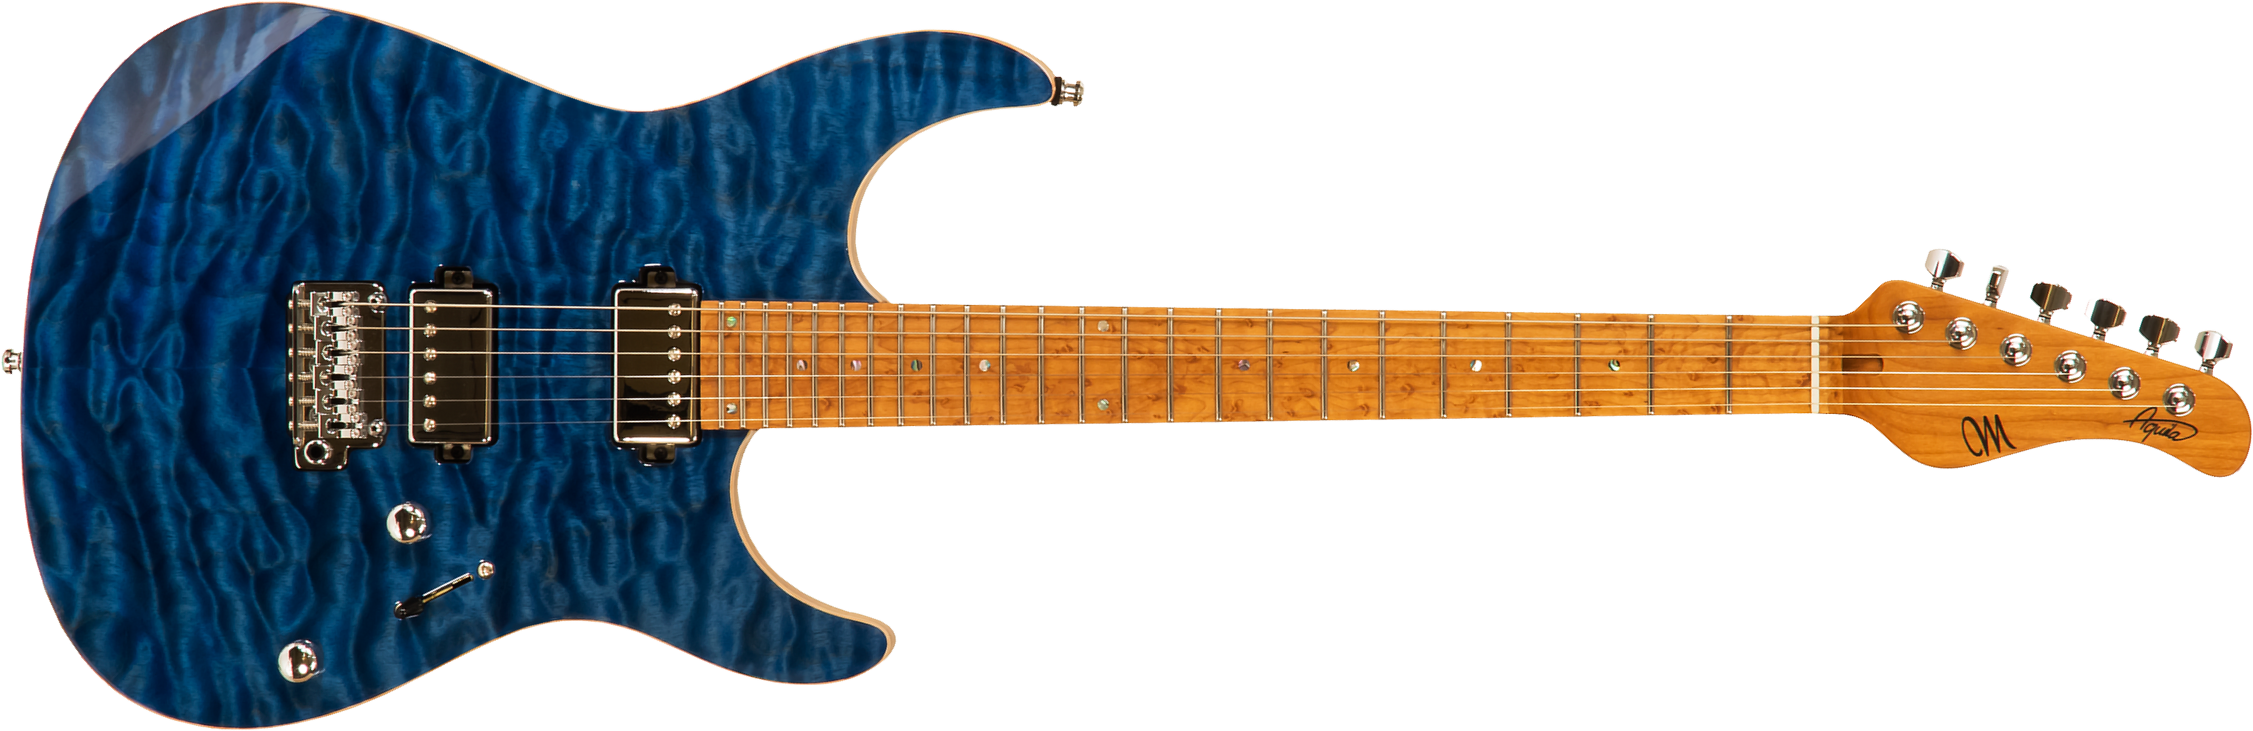 Mayones Guitars Aquila Elite S 6 40th Anniversary 2h Trem Mn #aq2204194 - Trans Blue Gloss - Guitarra eléctrica con forma de str. - Main picture